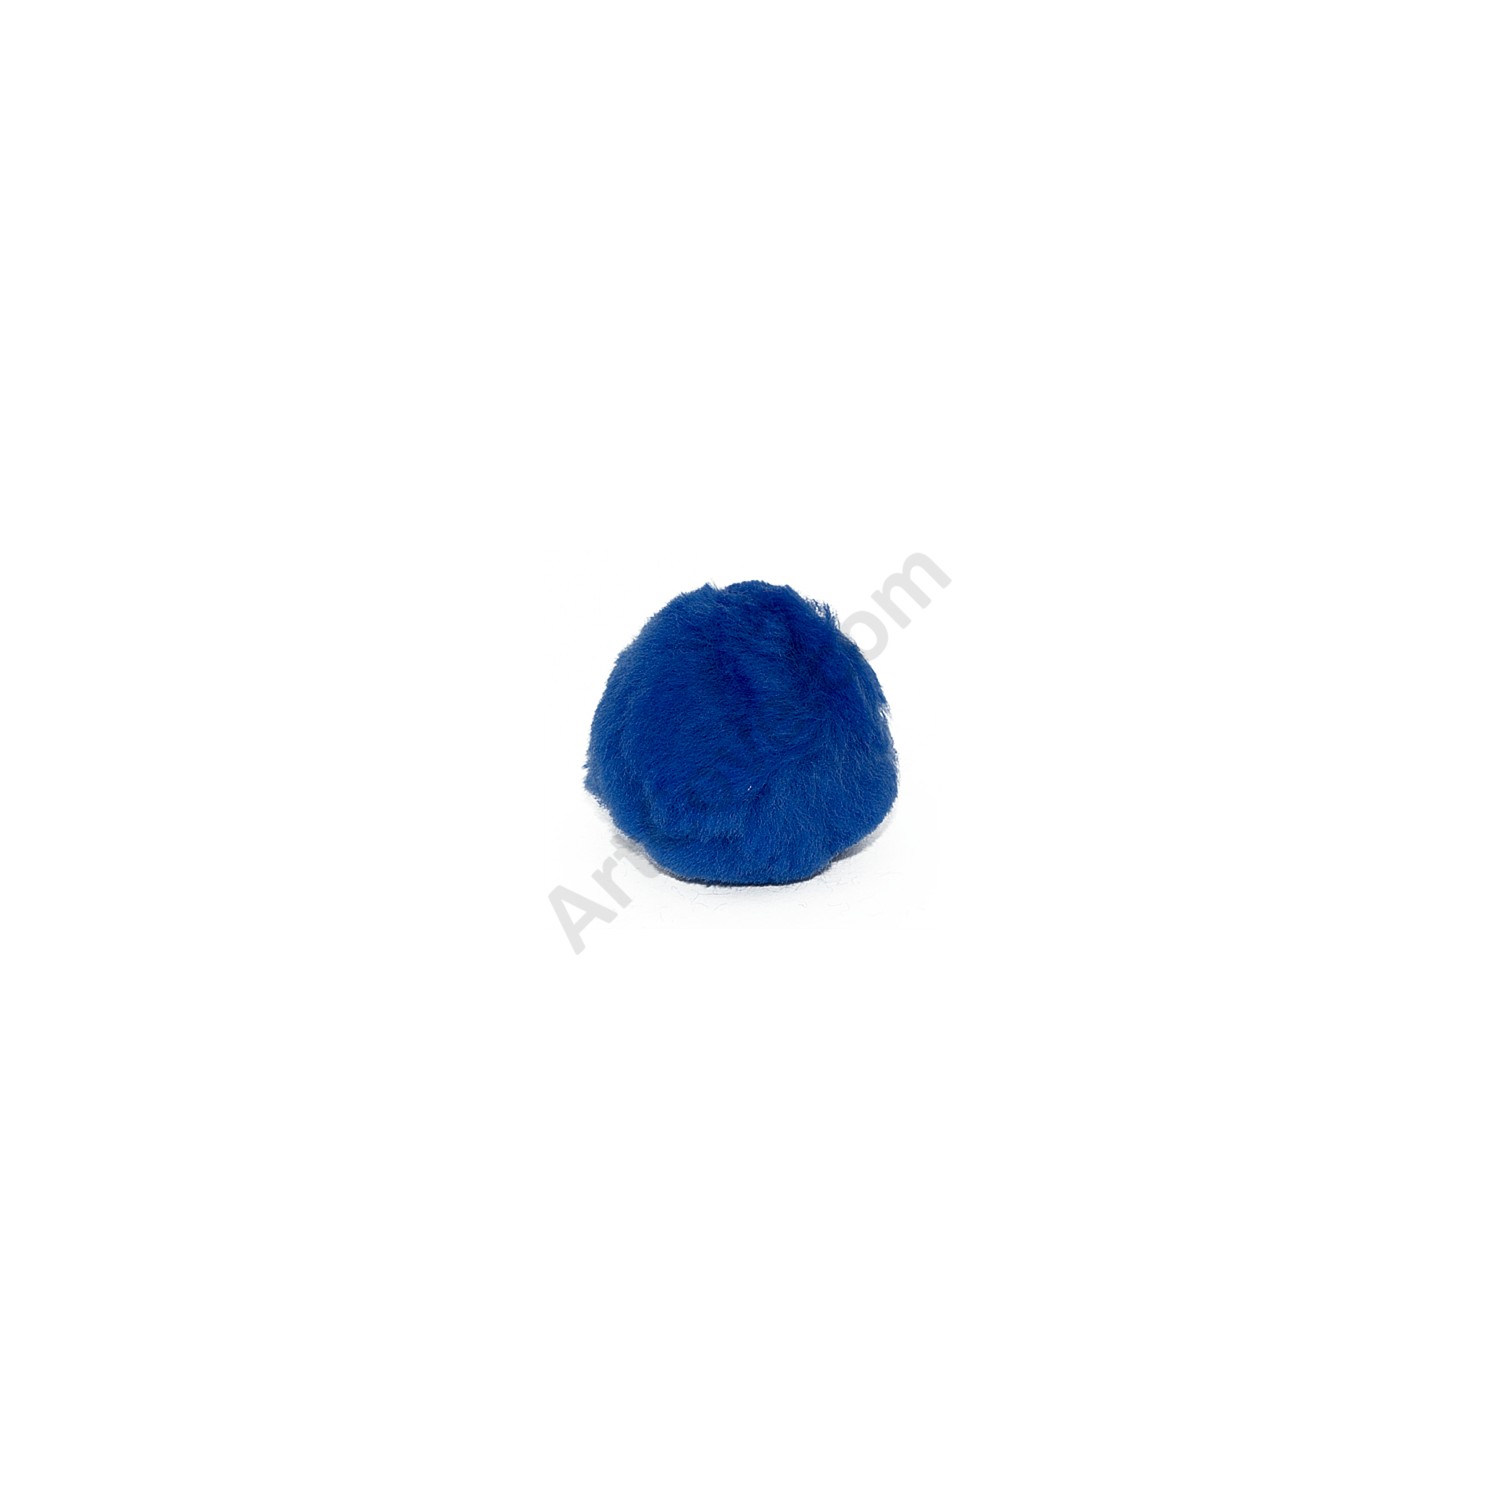 1 inch Royal Blue Small Craft Pom Poms 100 Pieces